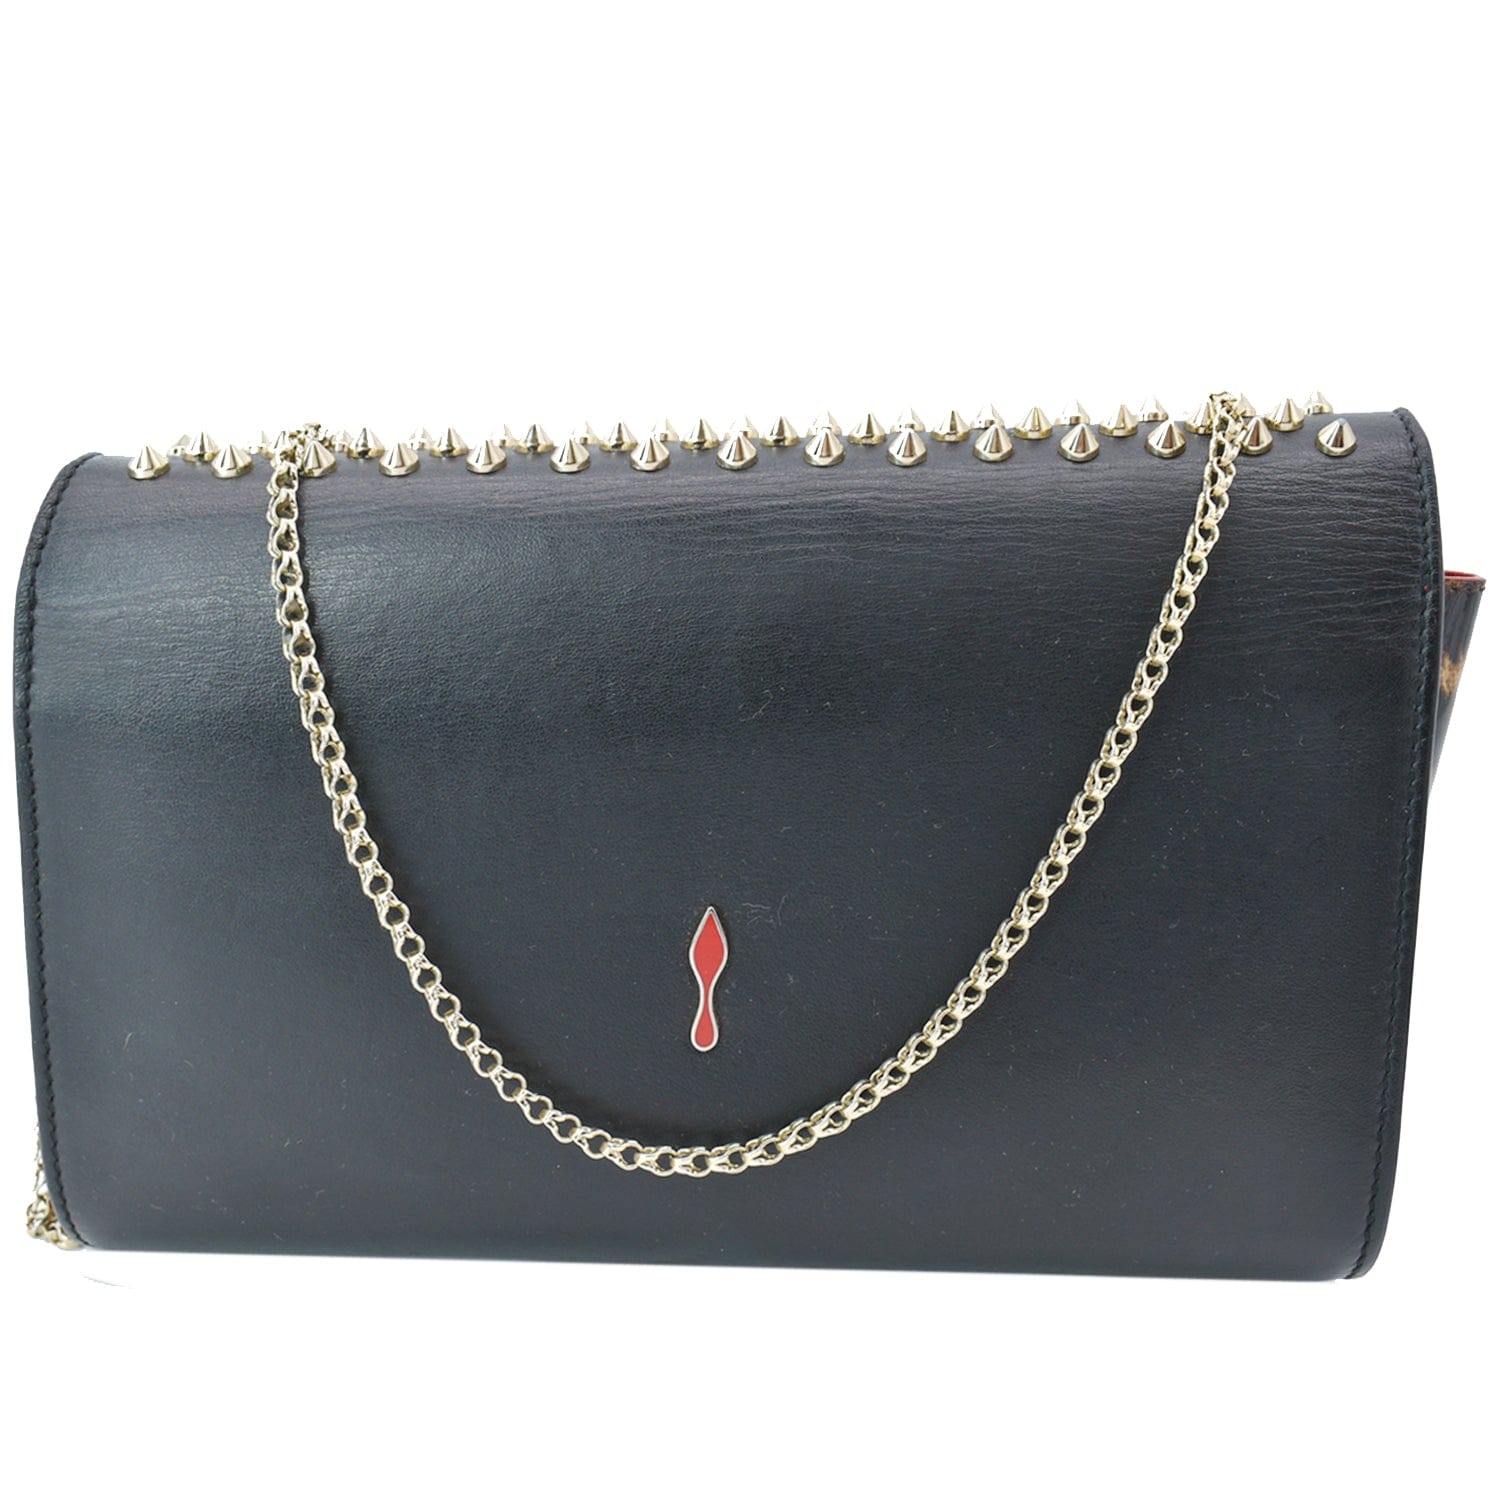 CHRISTIAN LOUBOUTIN Paloma Embellished Leather Chain Clutch Bag Black